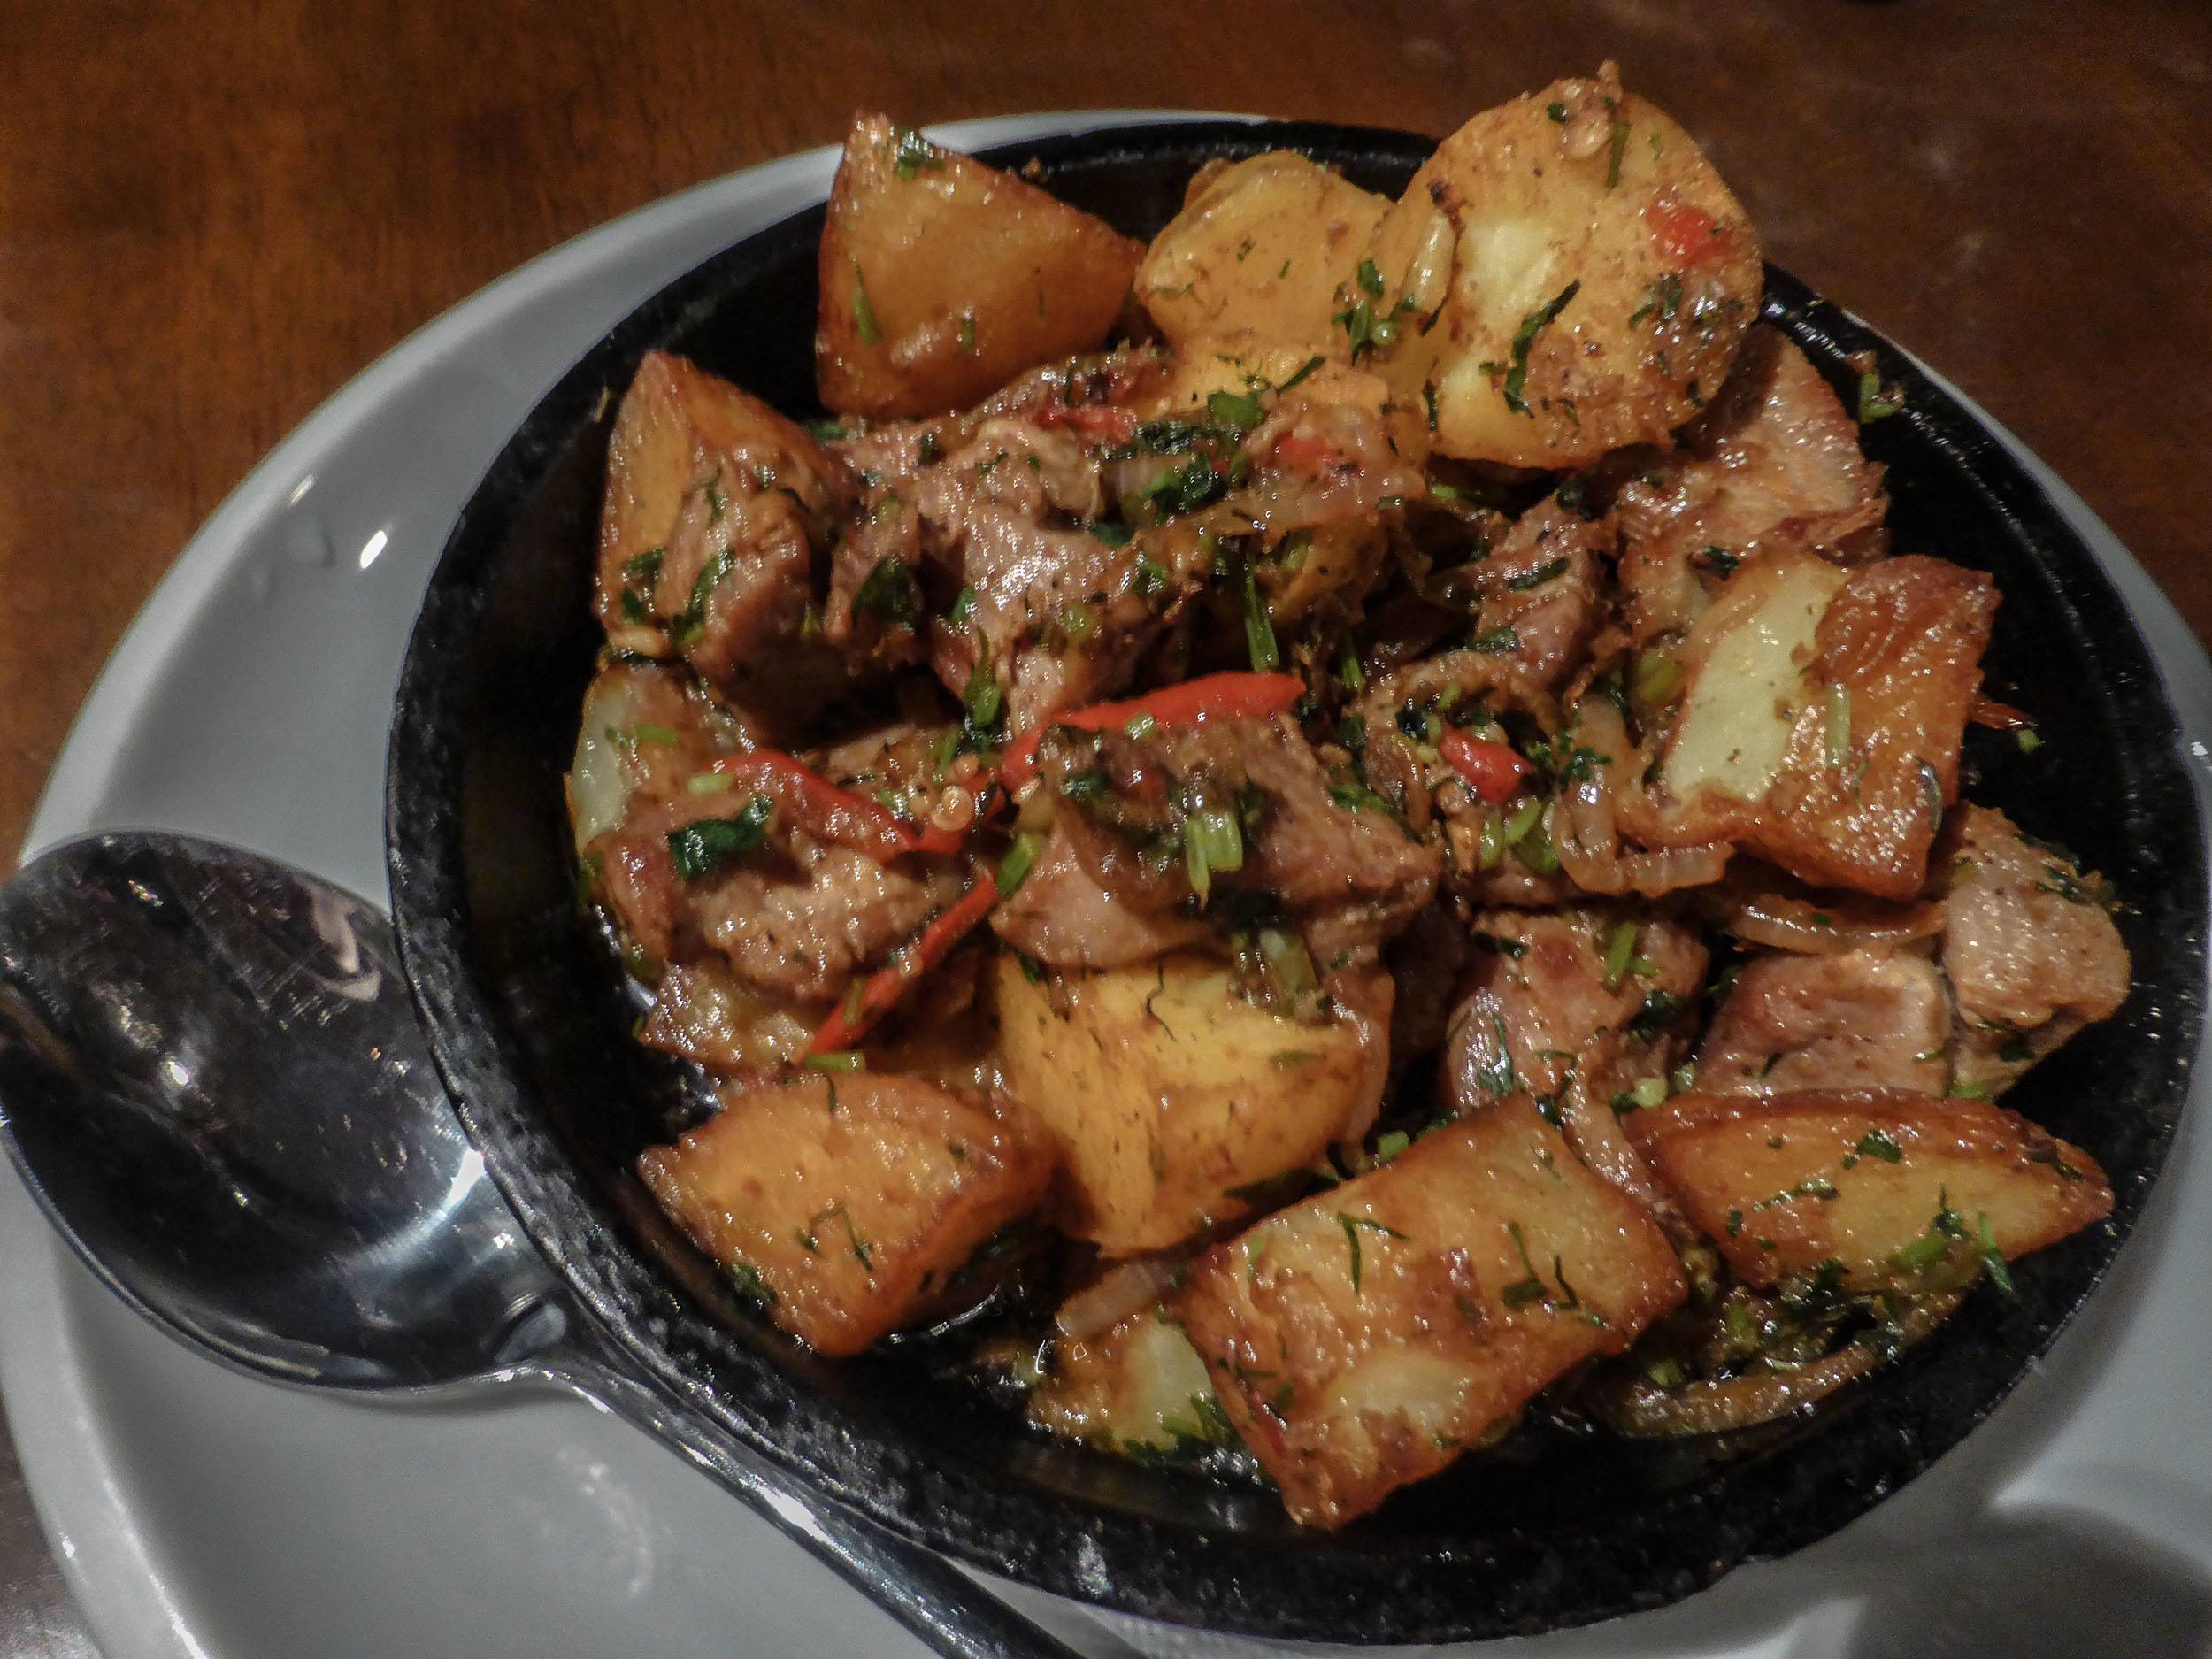 Potato and meat dish in Tbilisi Georgia